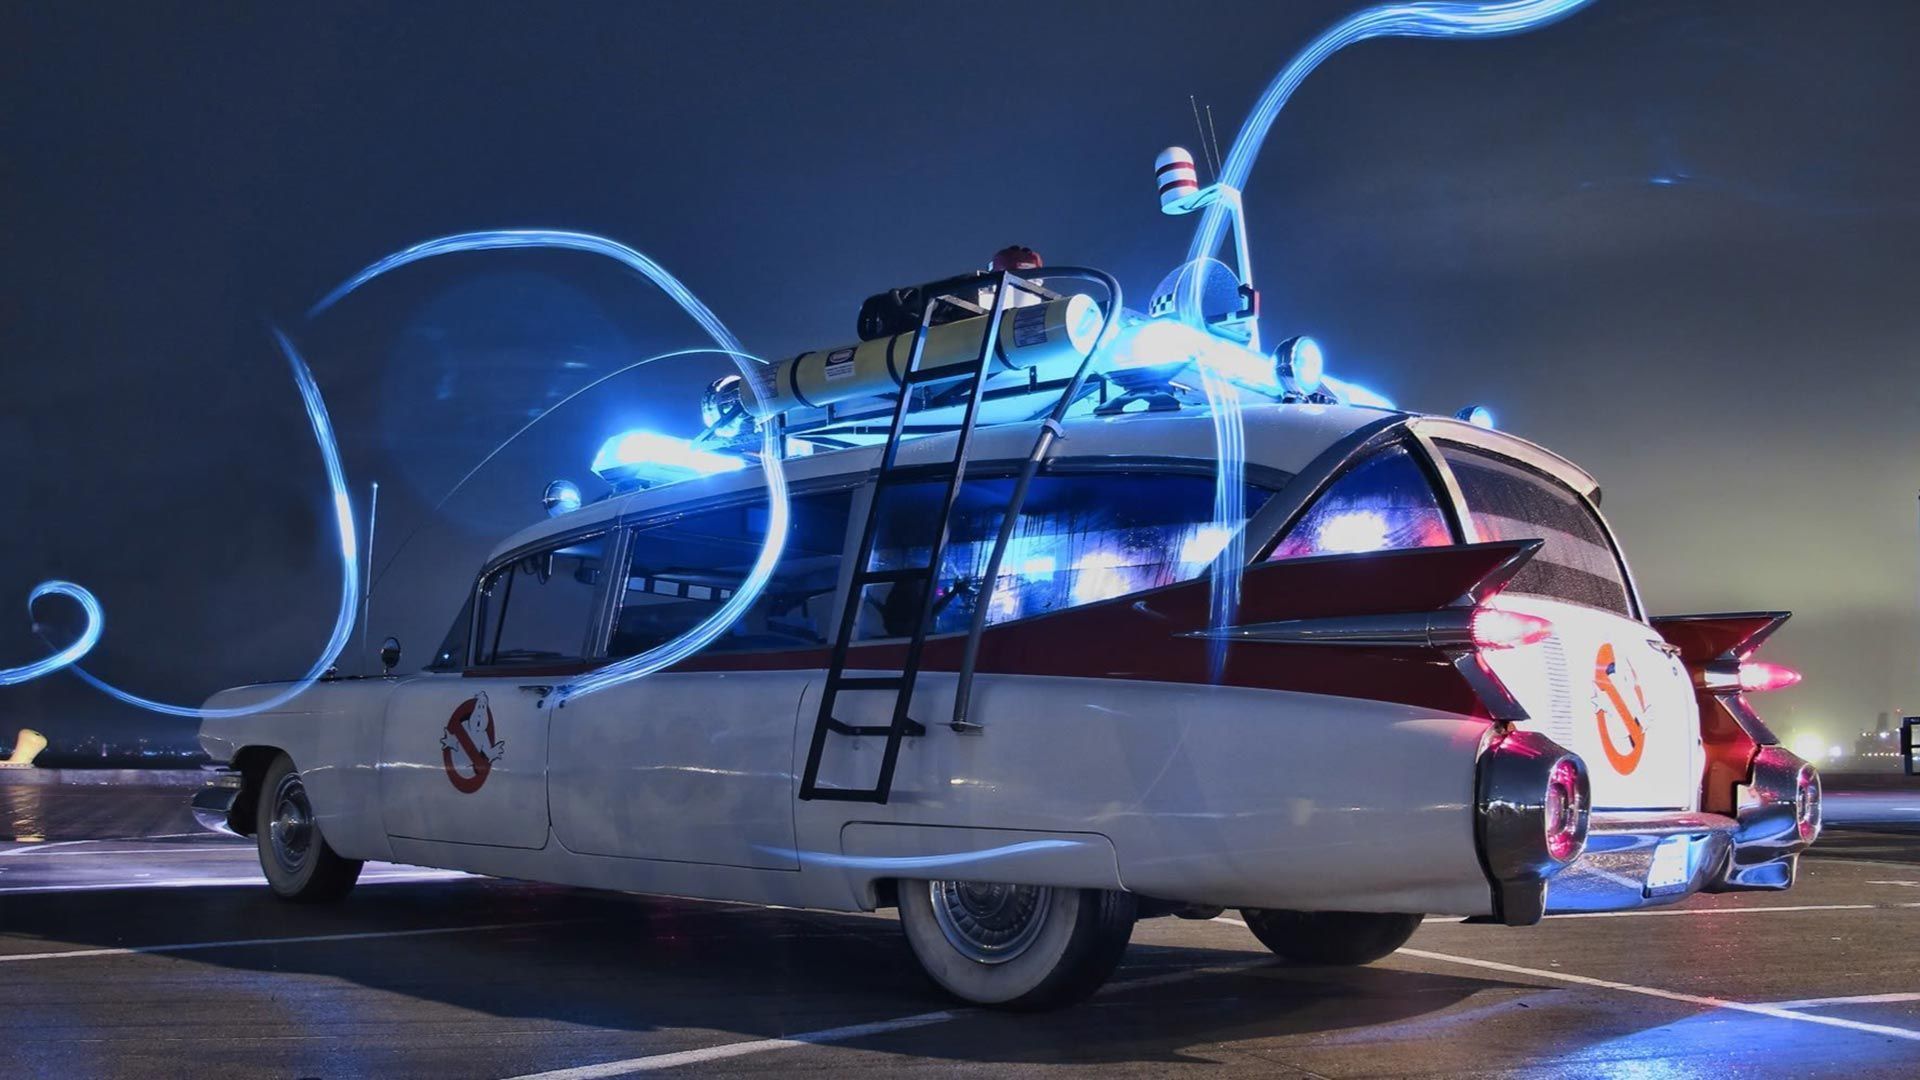 Ghostbusters Car Movie Wallpaper. Ghostbusters, Ghostbusters car